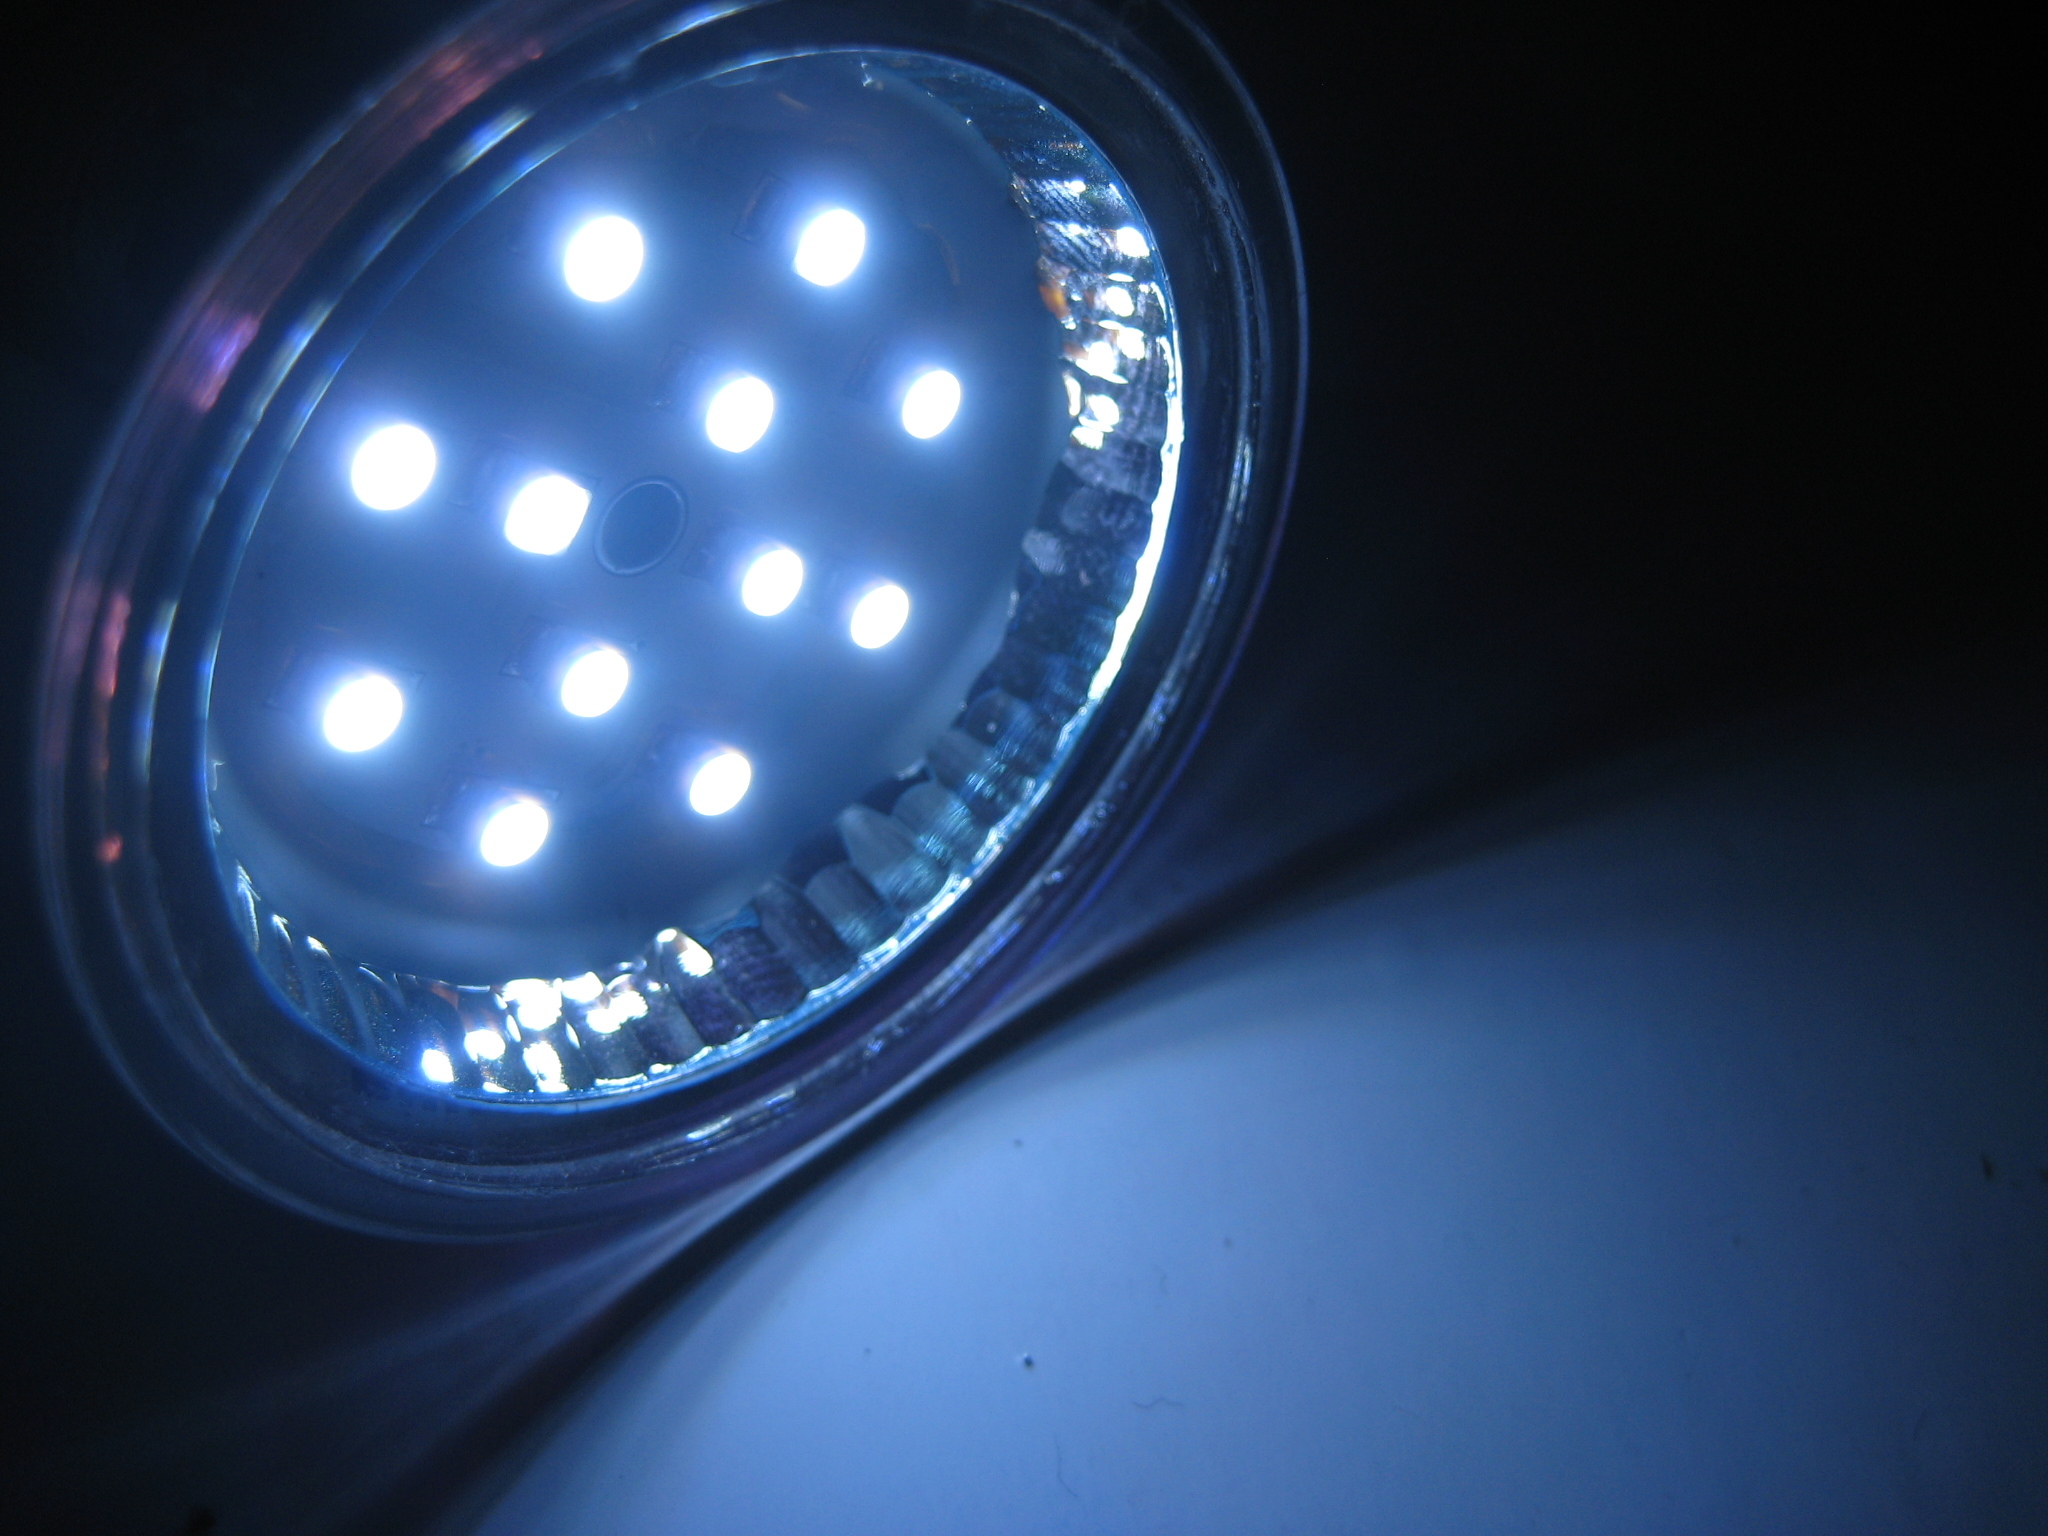 LED Halogen Light Converson Using 12v 12x LED Discs